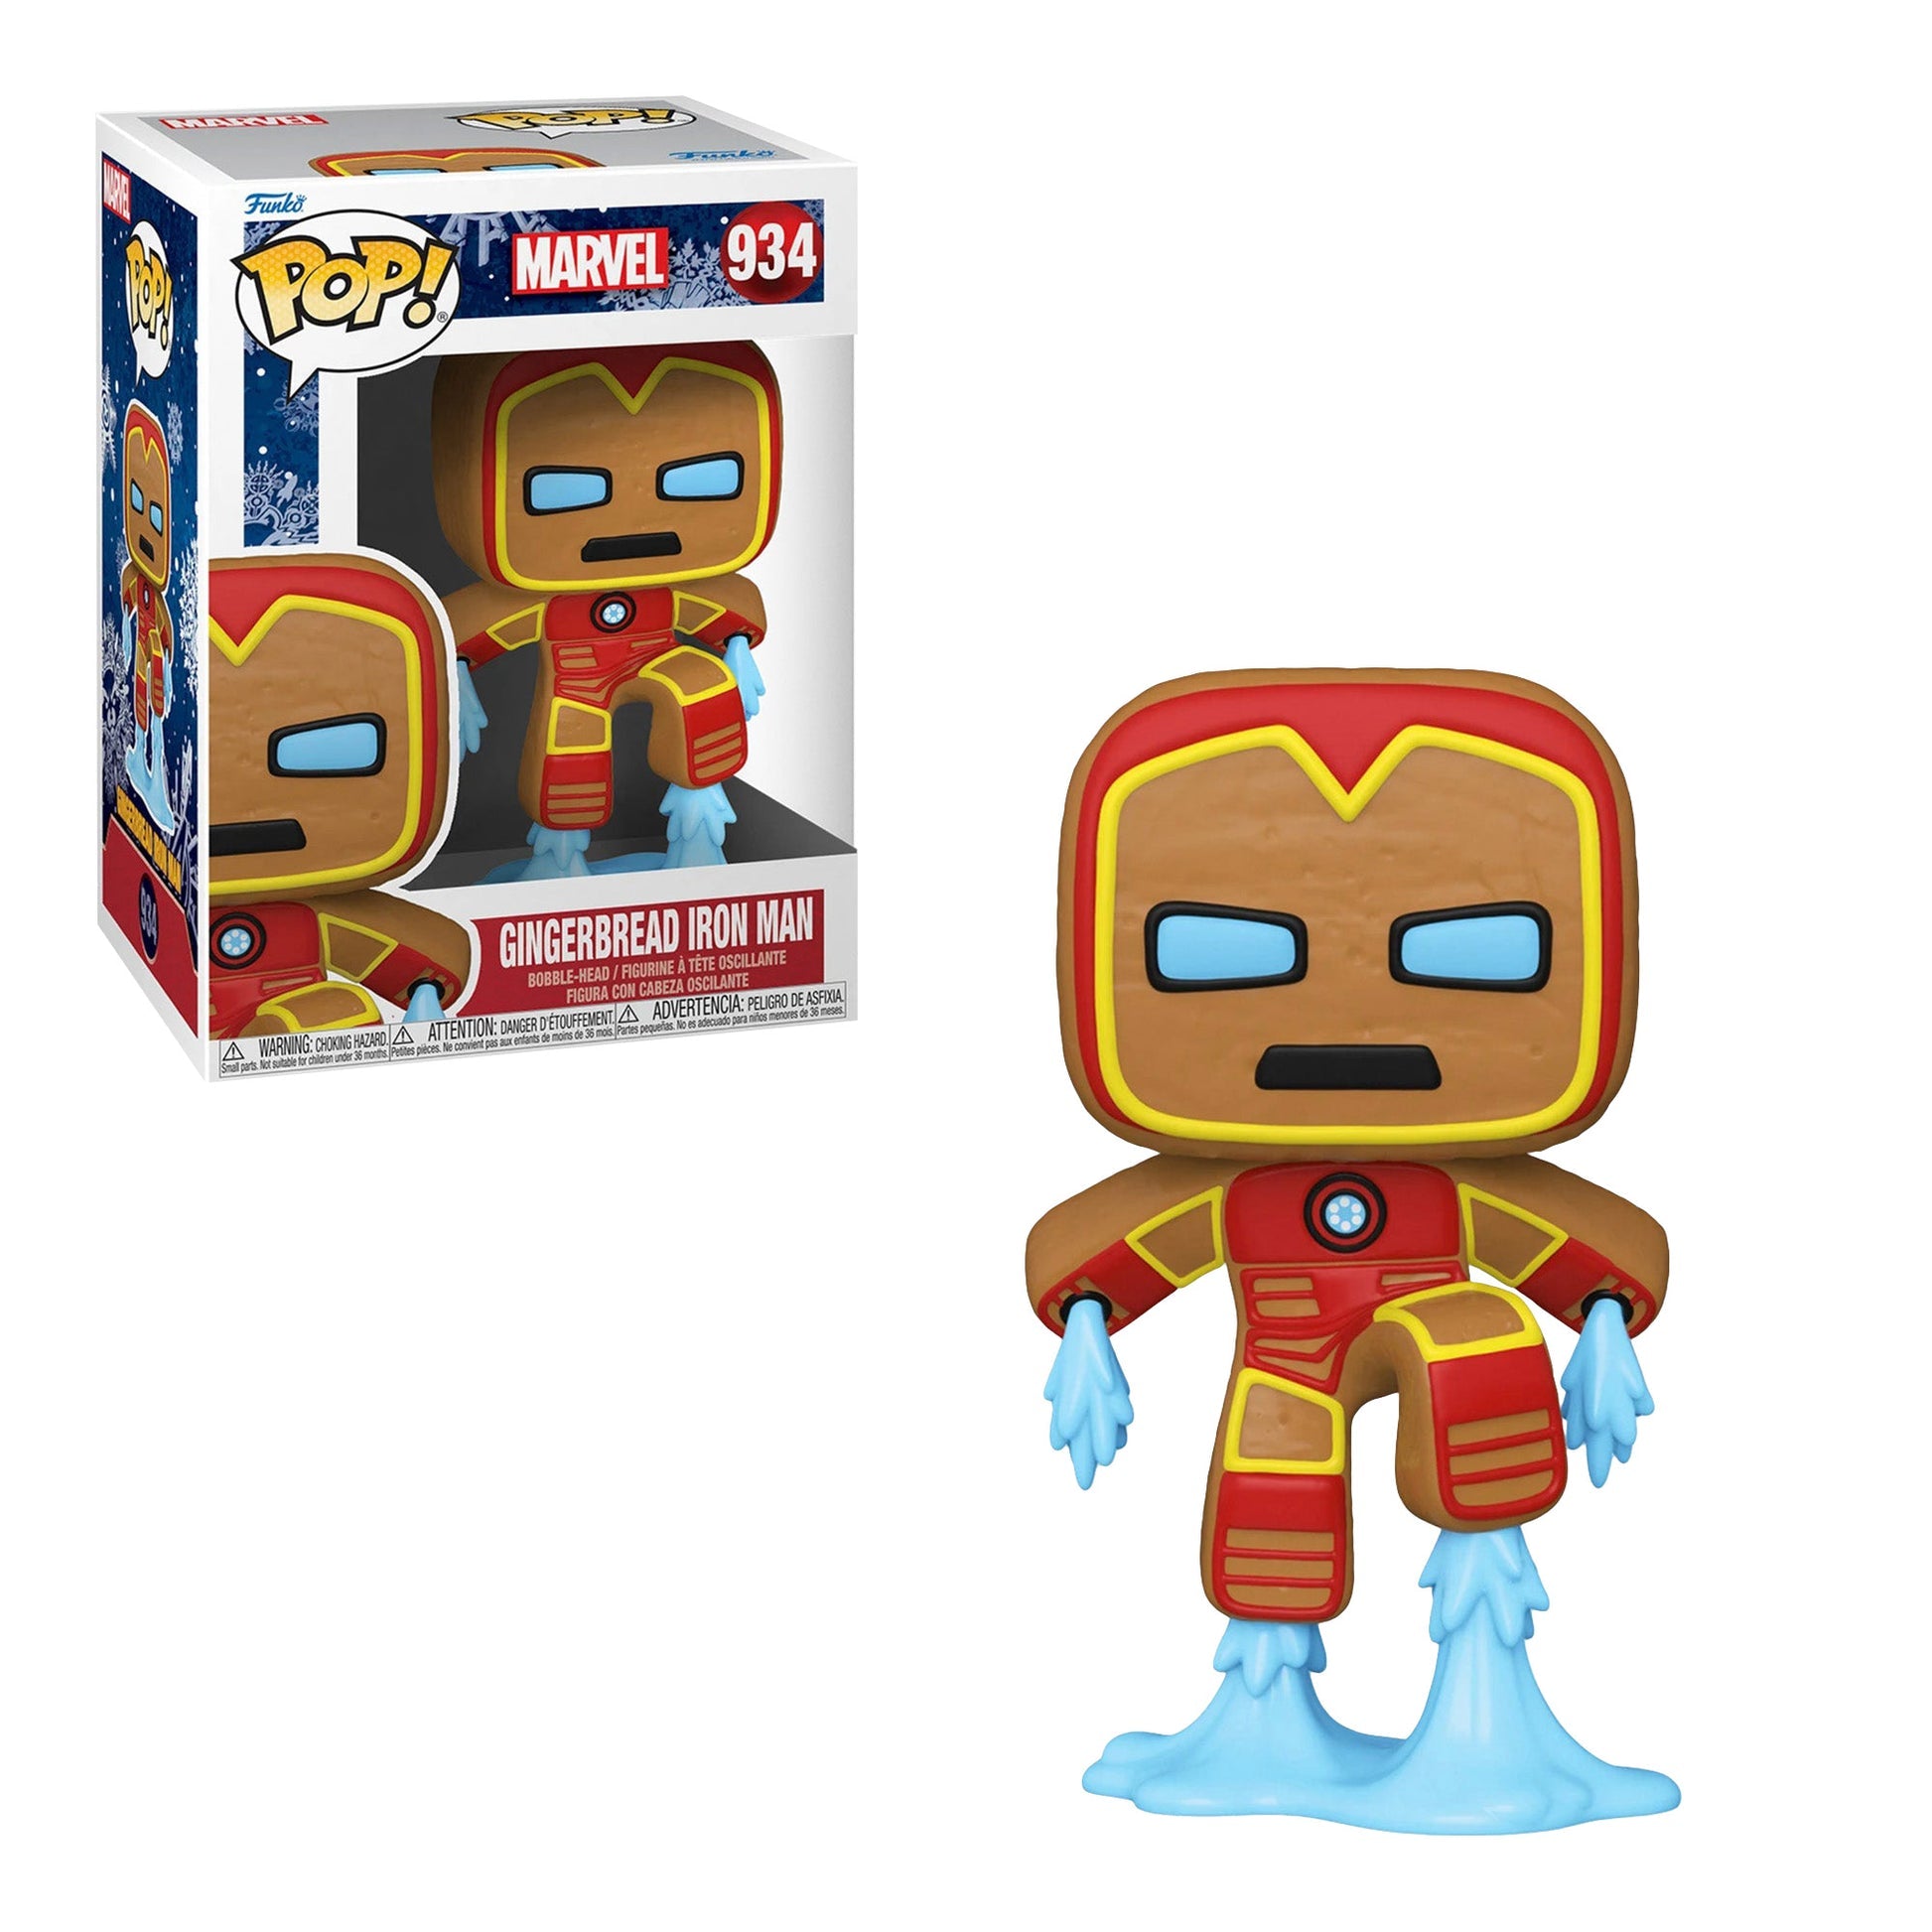 Gingerbread Iron Man 934